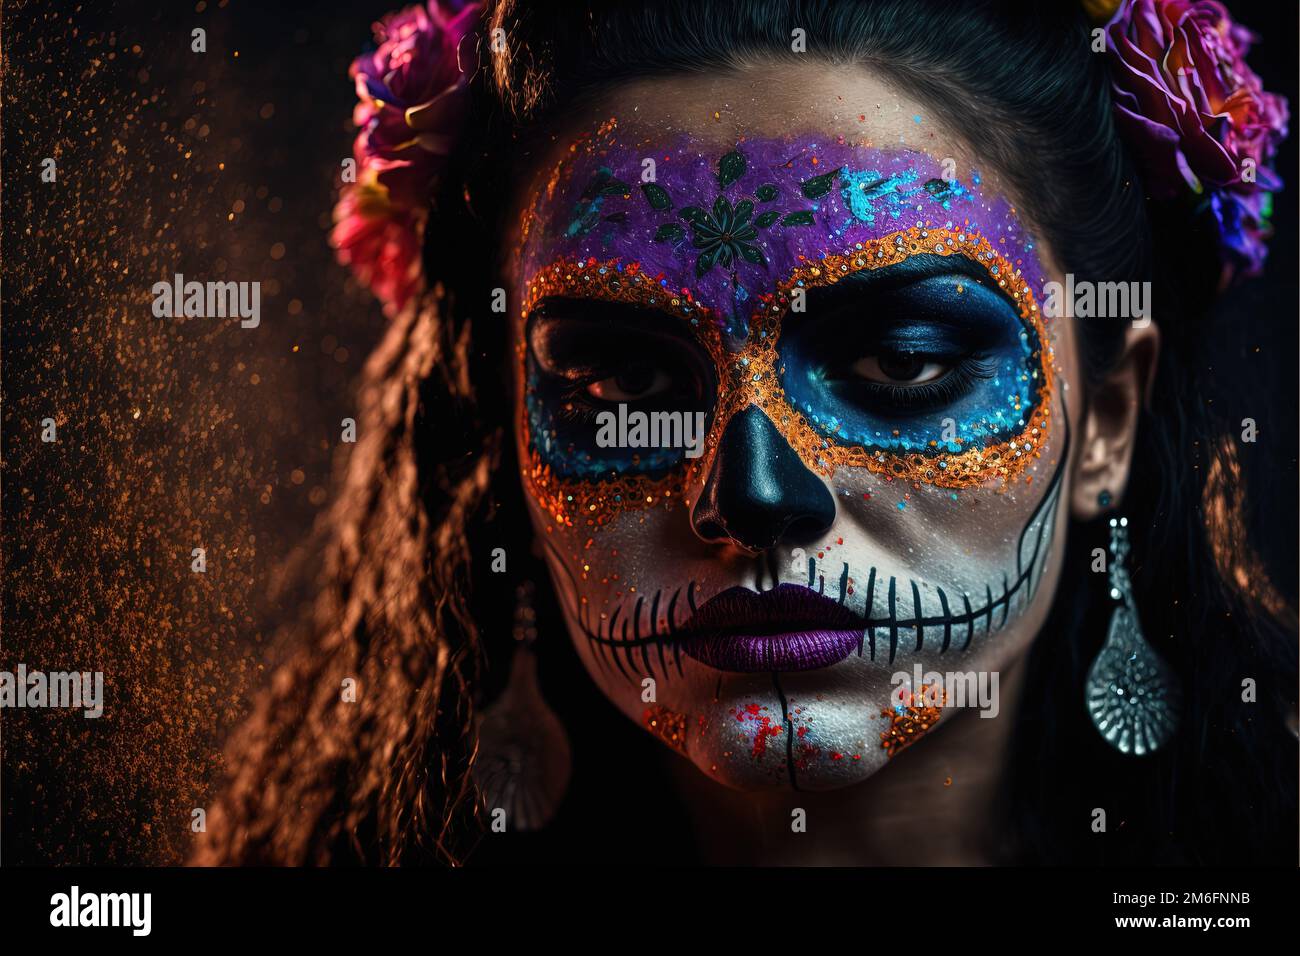  Fantasy Photo Poster Sugar Skull Makeup Girls Art Dia